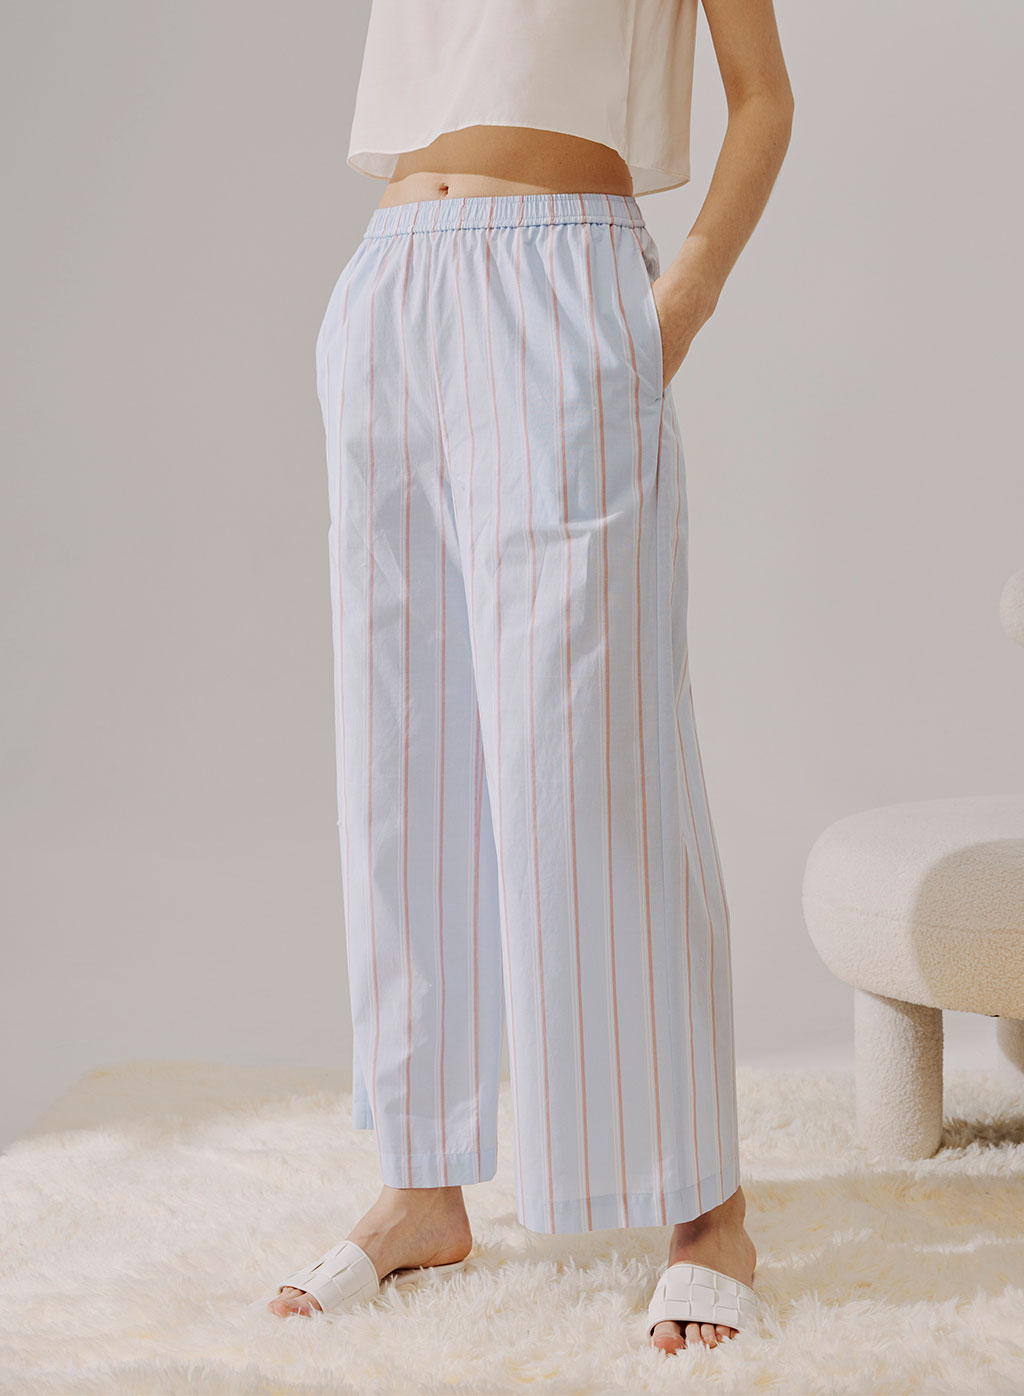 https://appapi.naploungewear.com/wp-content/uploads/2022/02/sailor-striped-pajama-pants0.jpg